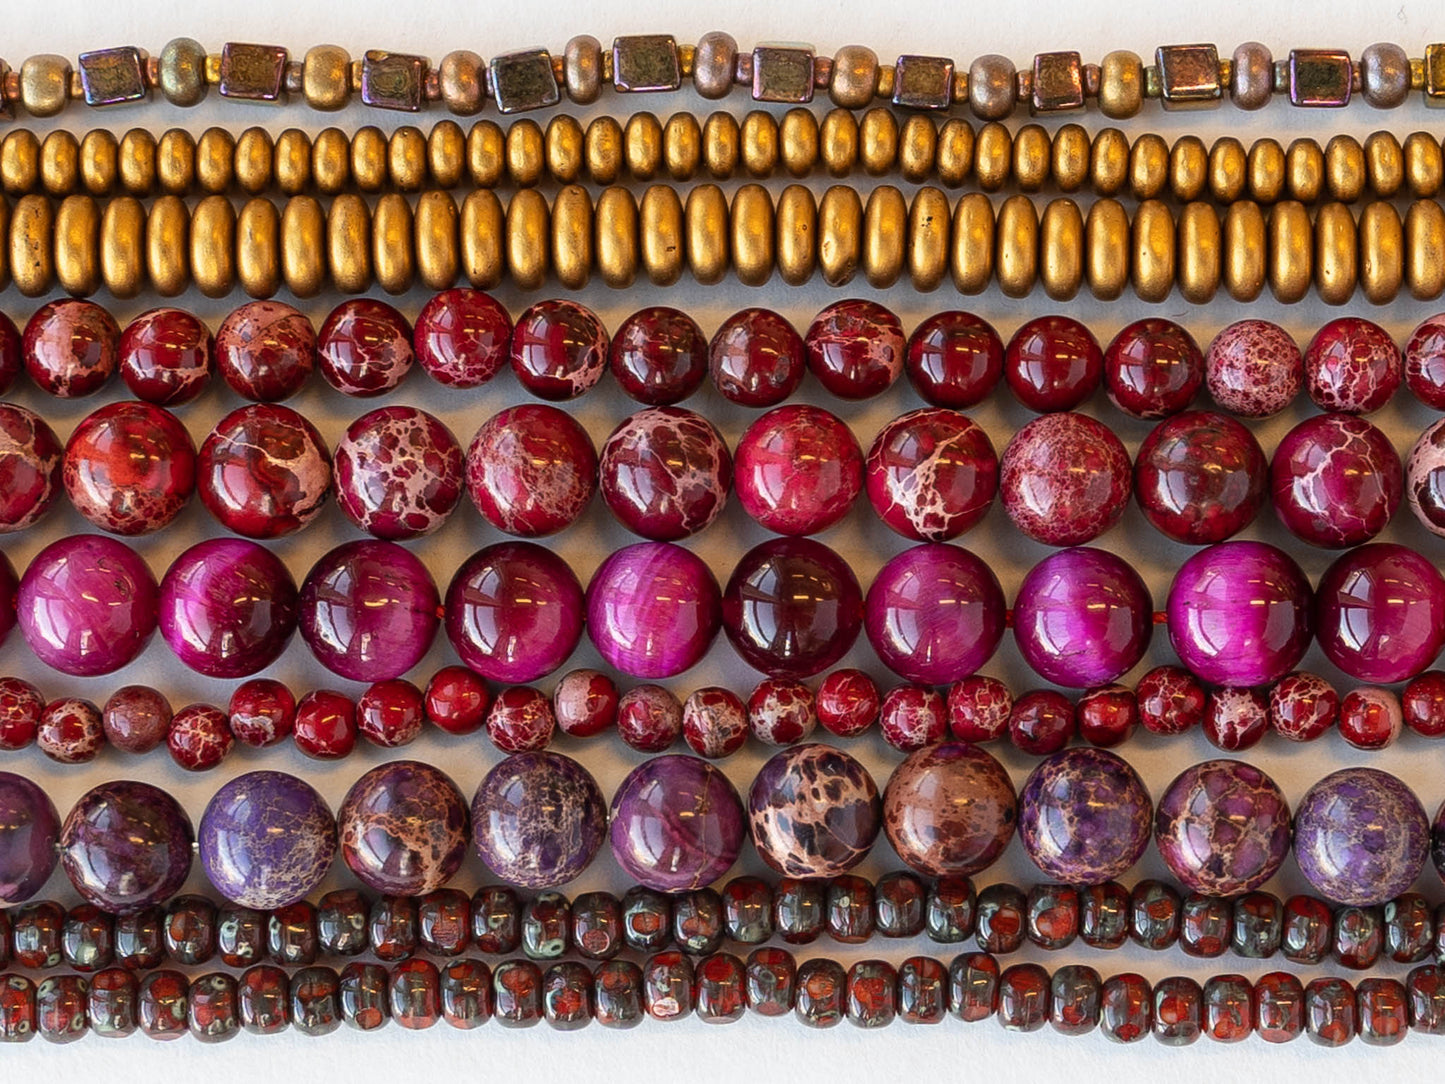 8x10mm Mykonos Metal Heart Beads - Antiqued Gold - 10 beads